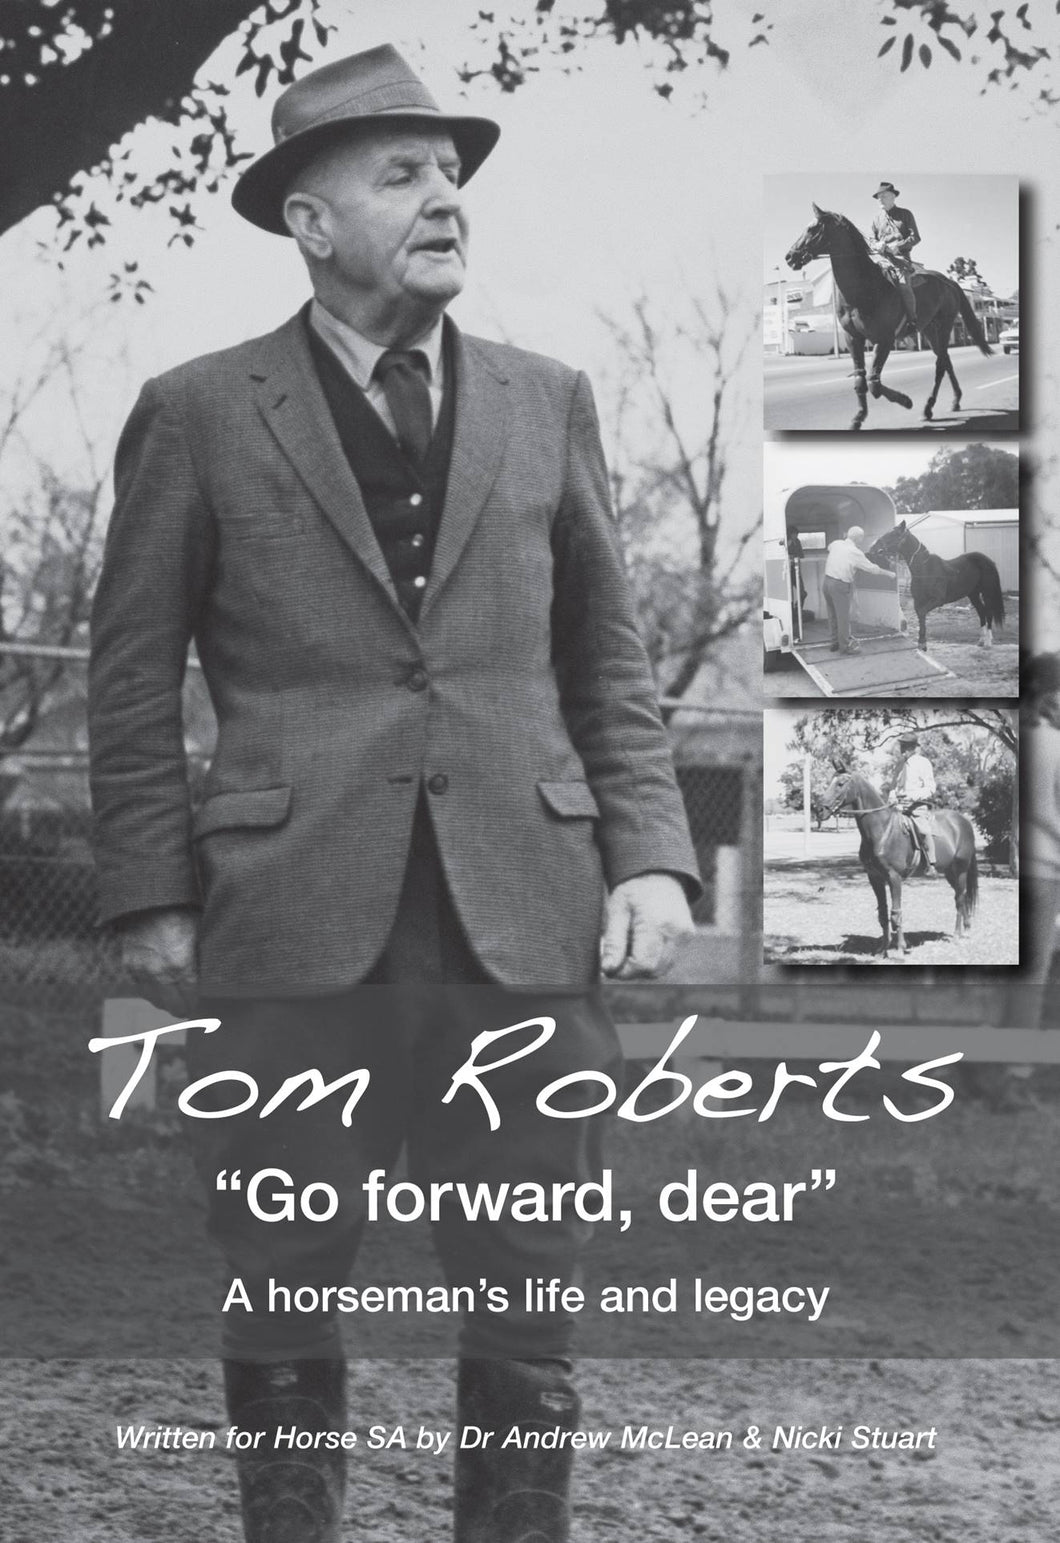 E-book: Tom Roberts 'Go forward, dear' A horseman's life and legacy EPUB file